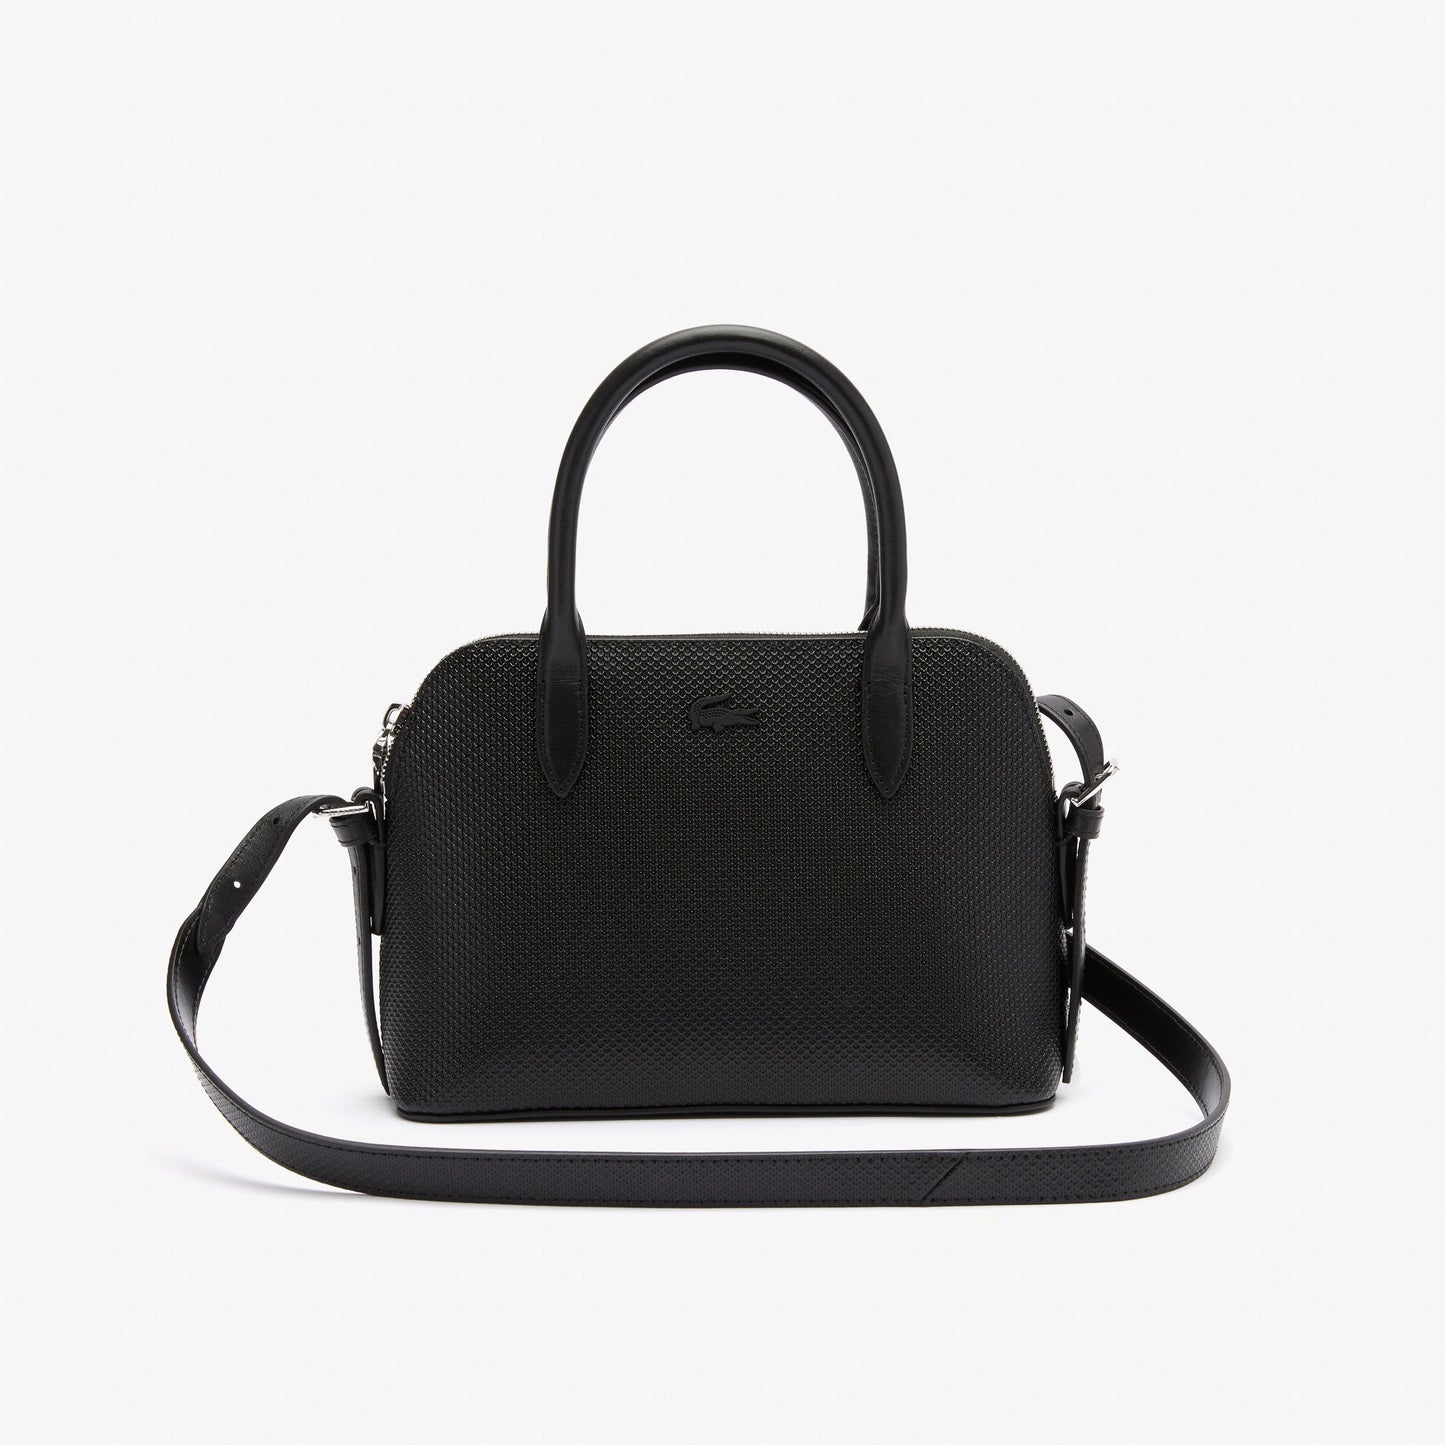 Women's Chantaco Pique Leather Top Handle Bag - NF3723KL